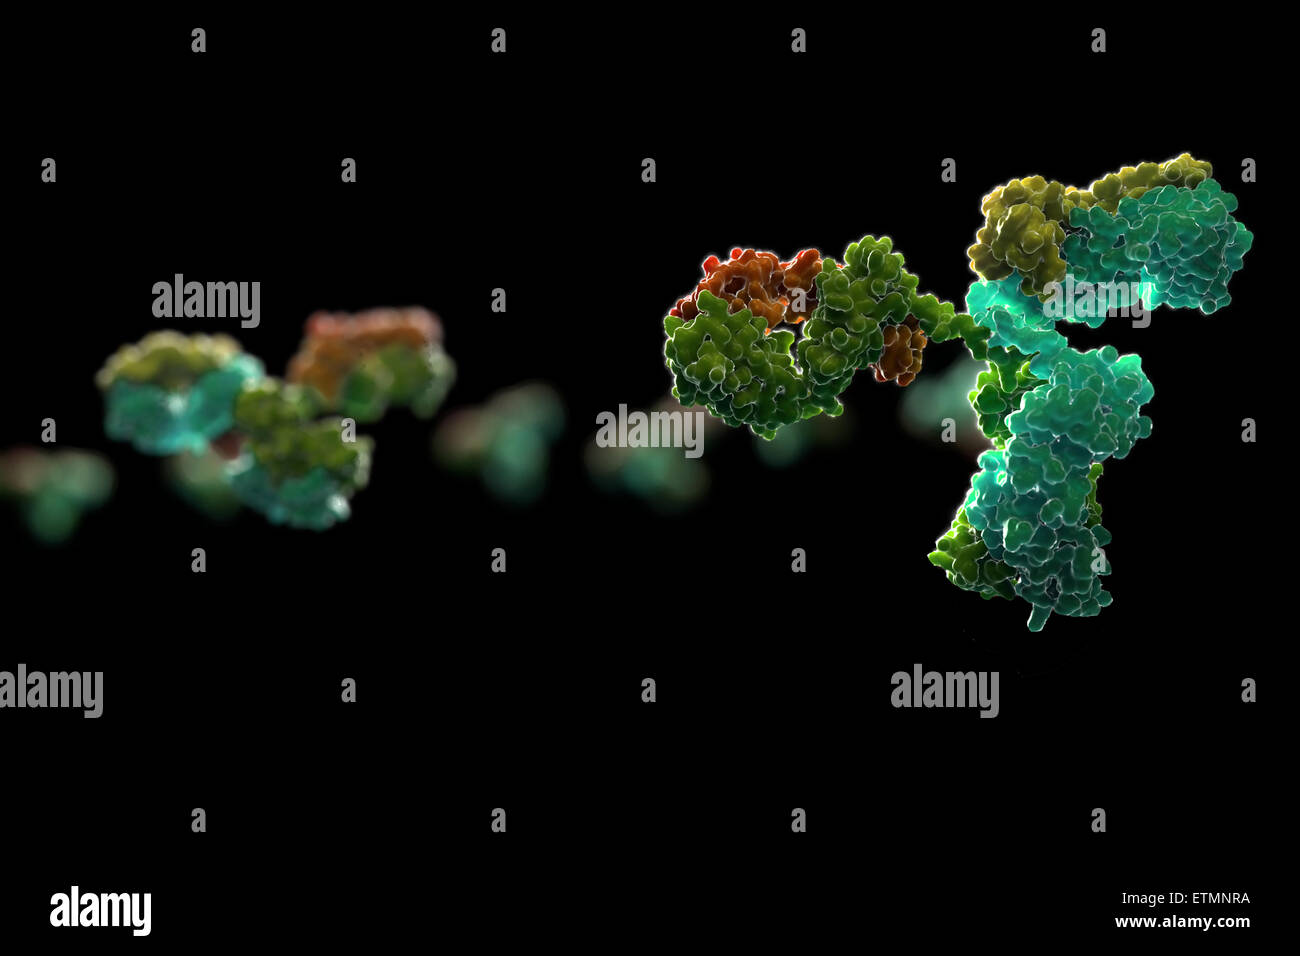 Stylized illustration of y-shaped antibody 1IGT, part of the human immune system. Stock Photo